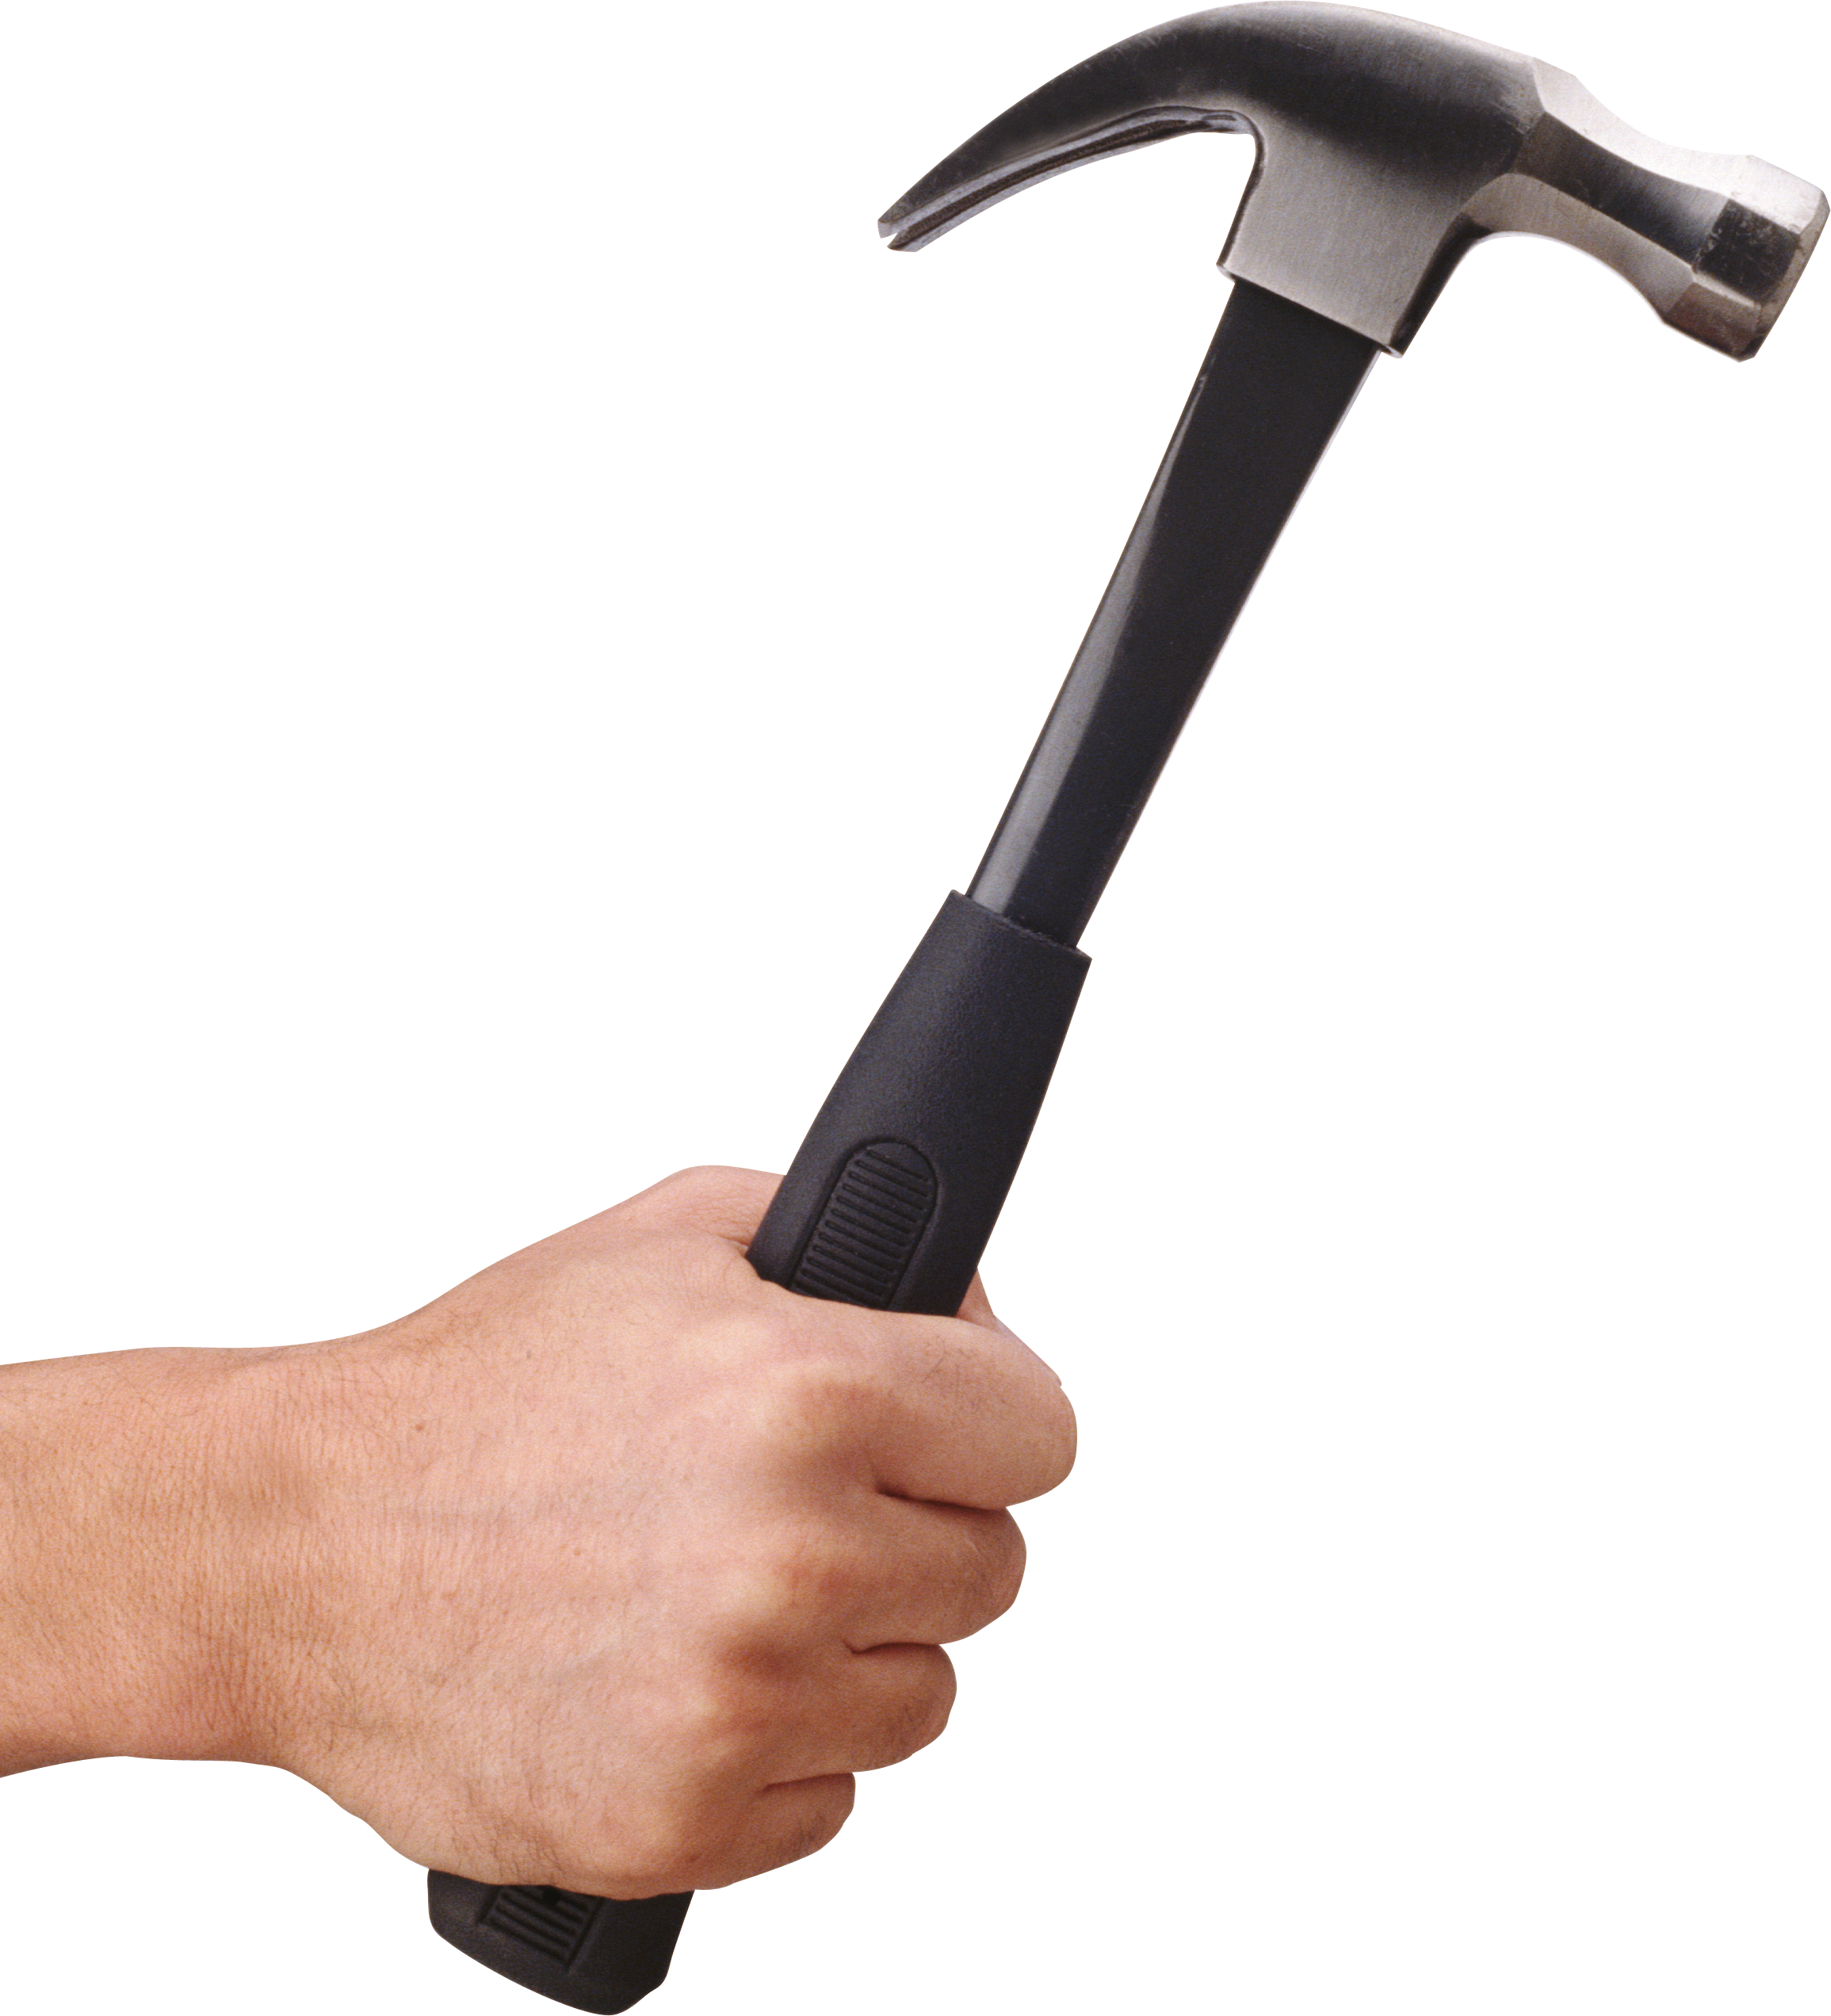 Hammer Image - Hand Holding Hammer (2310x2543)